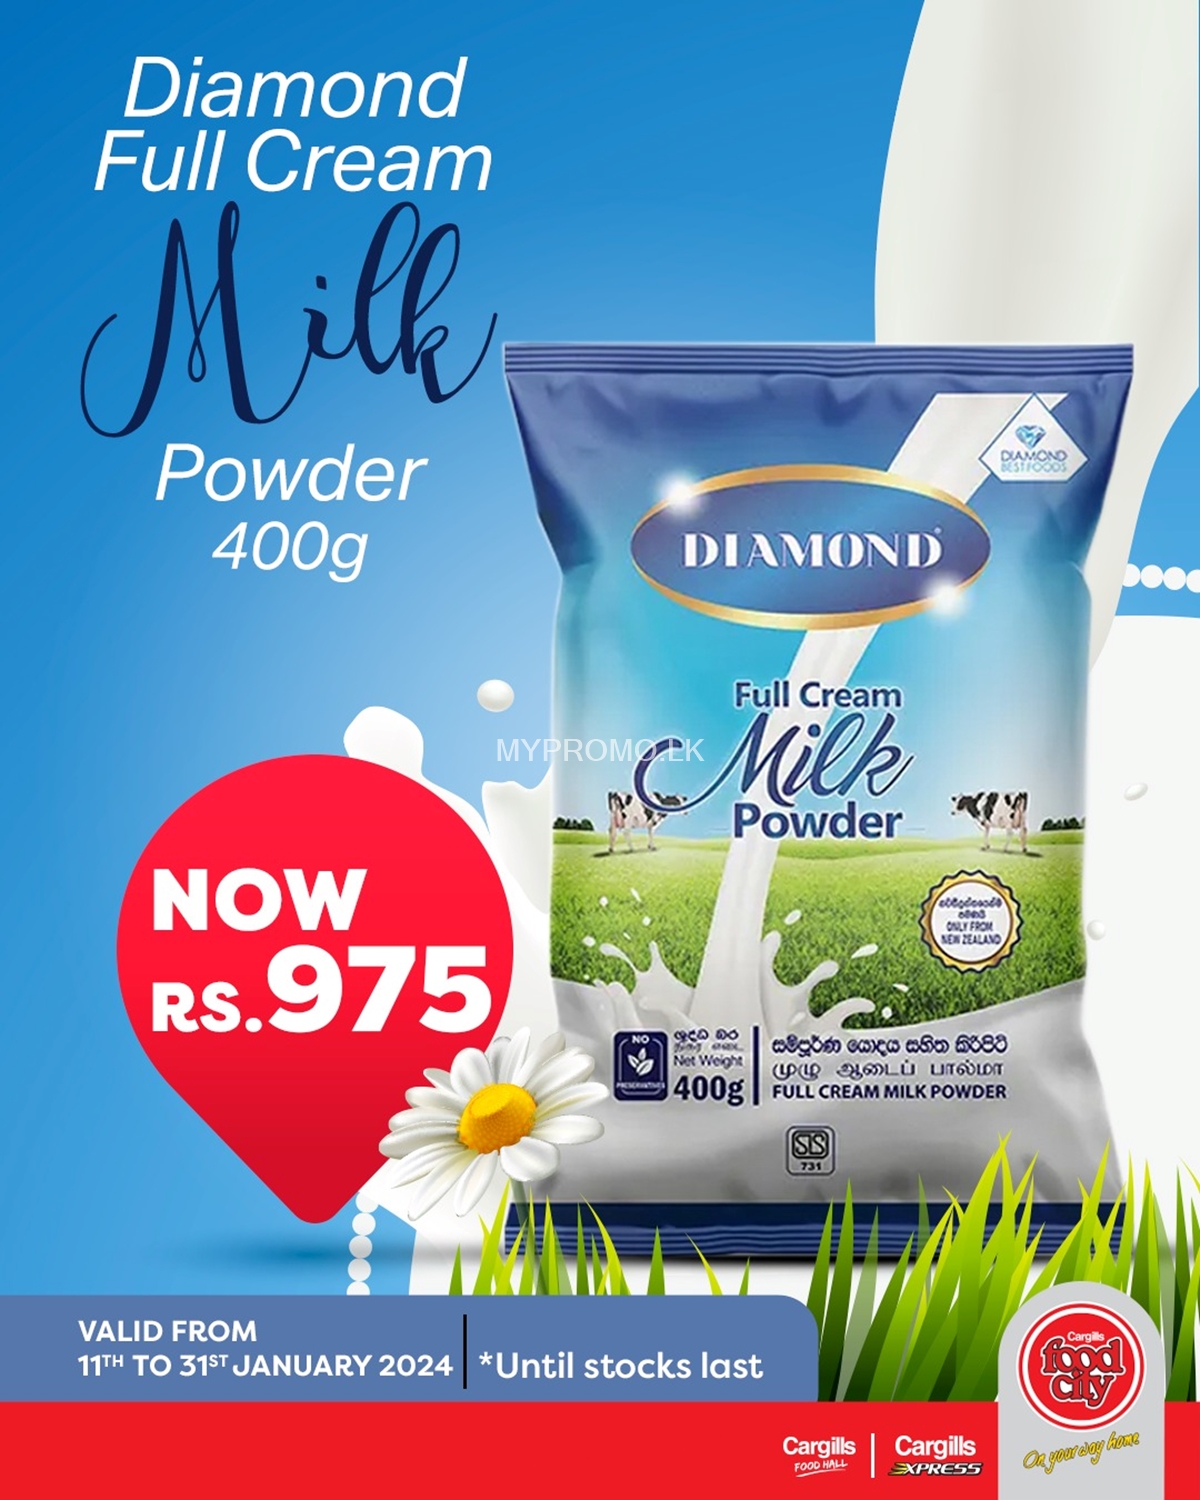 Enjoy the Diamond Full Cream Milk Powder 400g now at Rs.975 at Cargills Food City